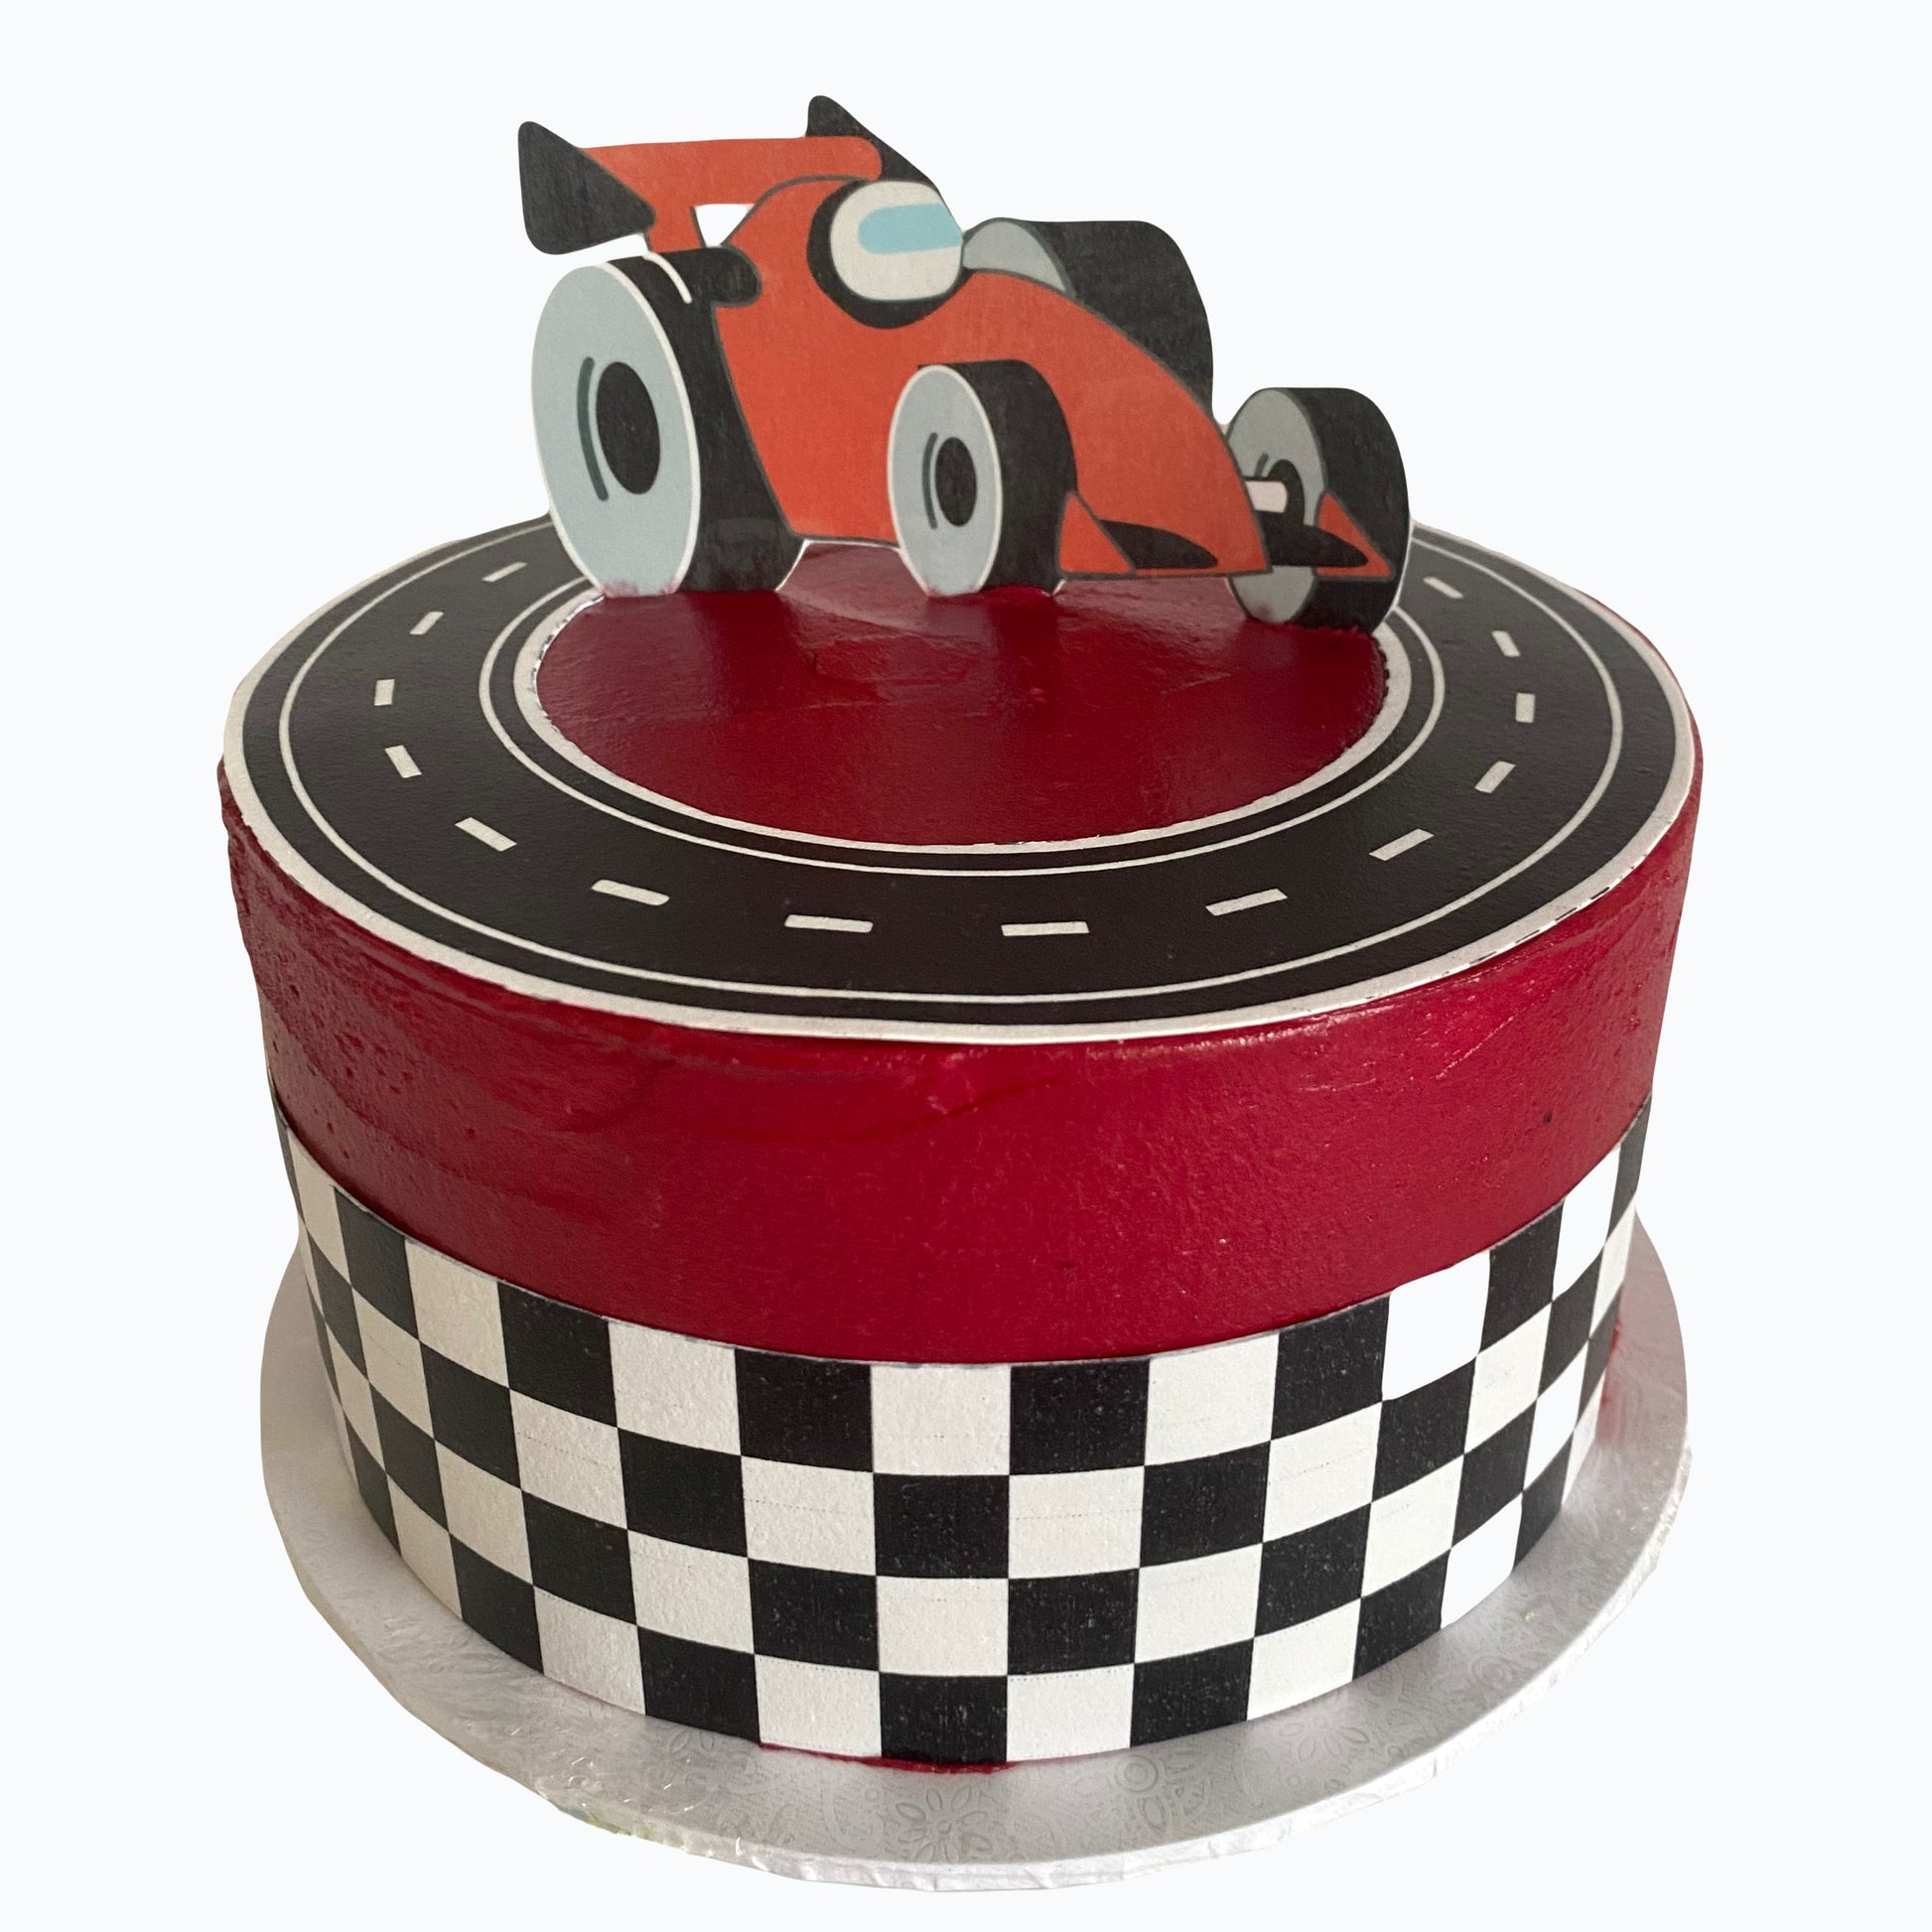 Turbo Racing Car Cake Kit